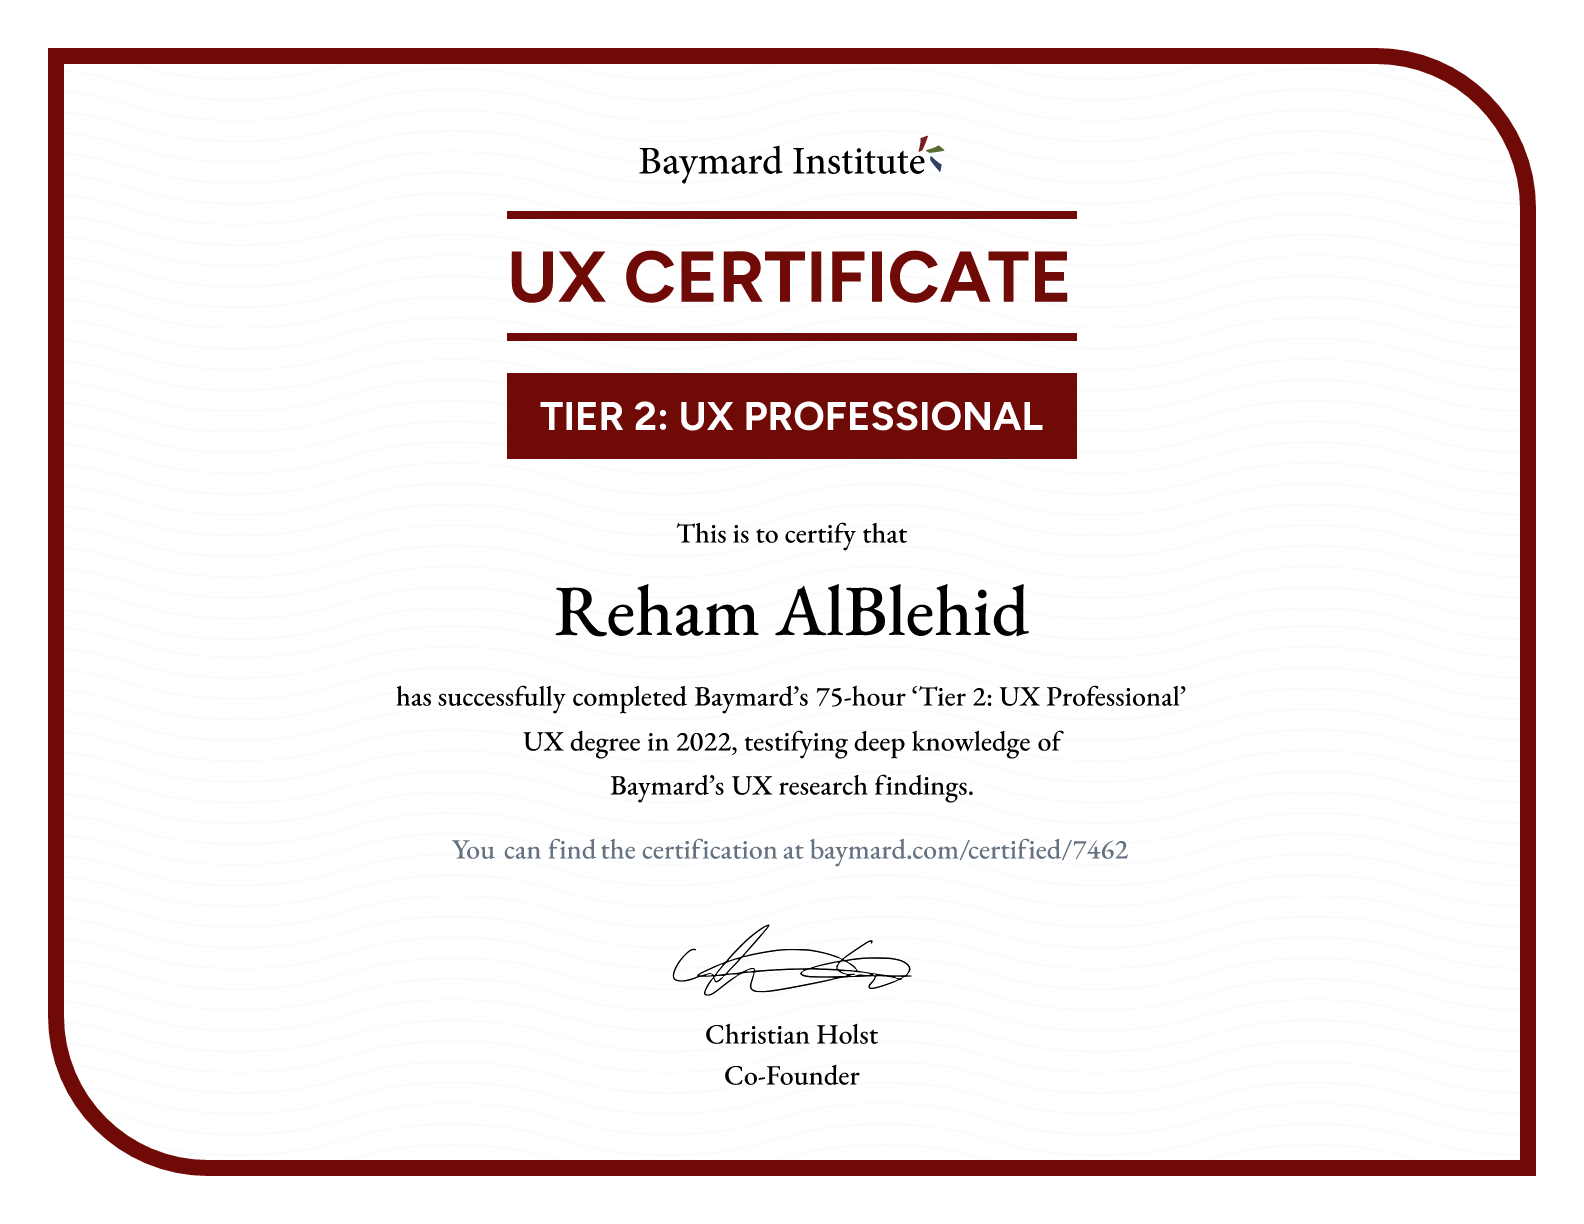 Reham AlBlehid’s certificate